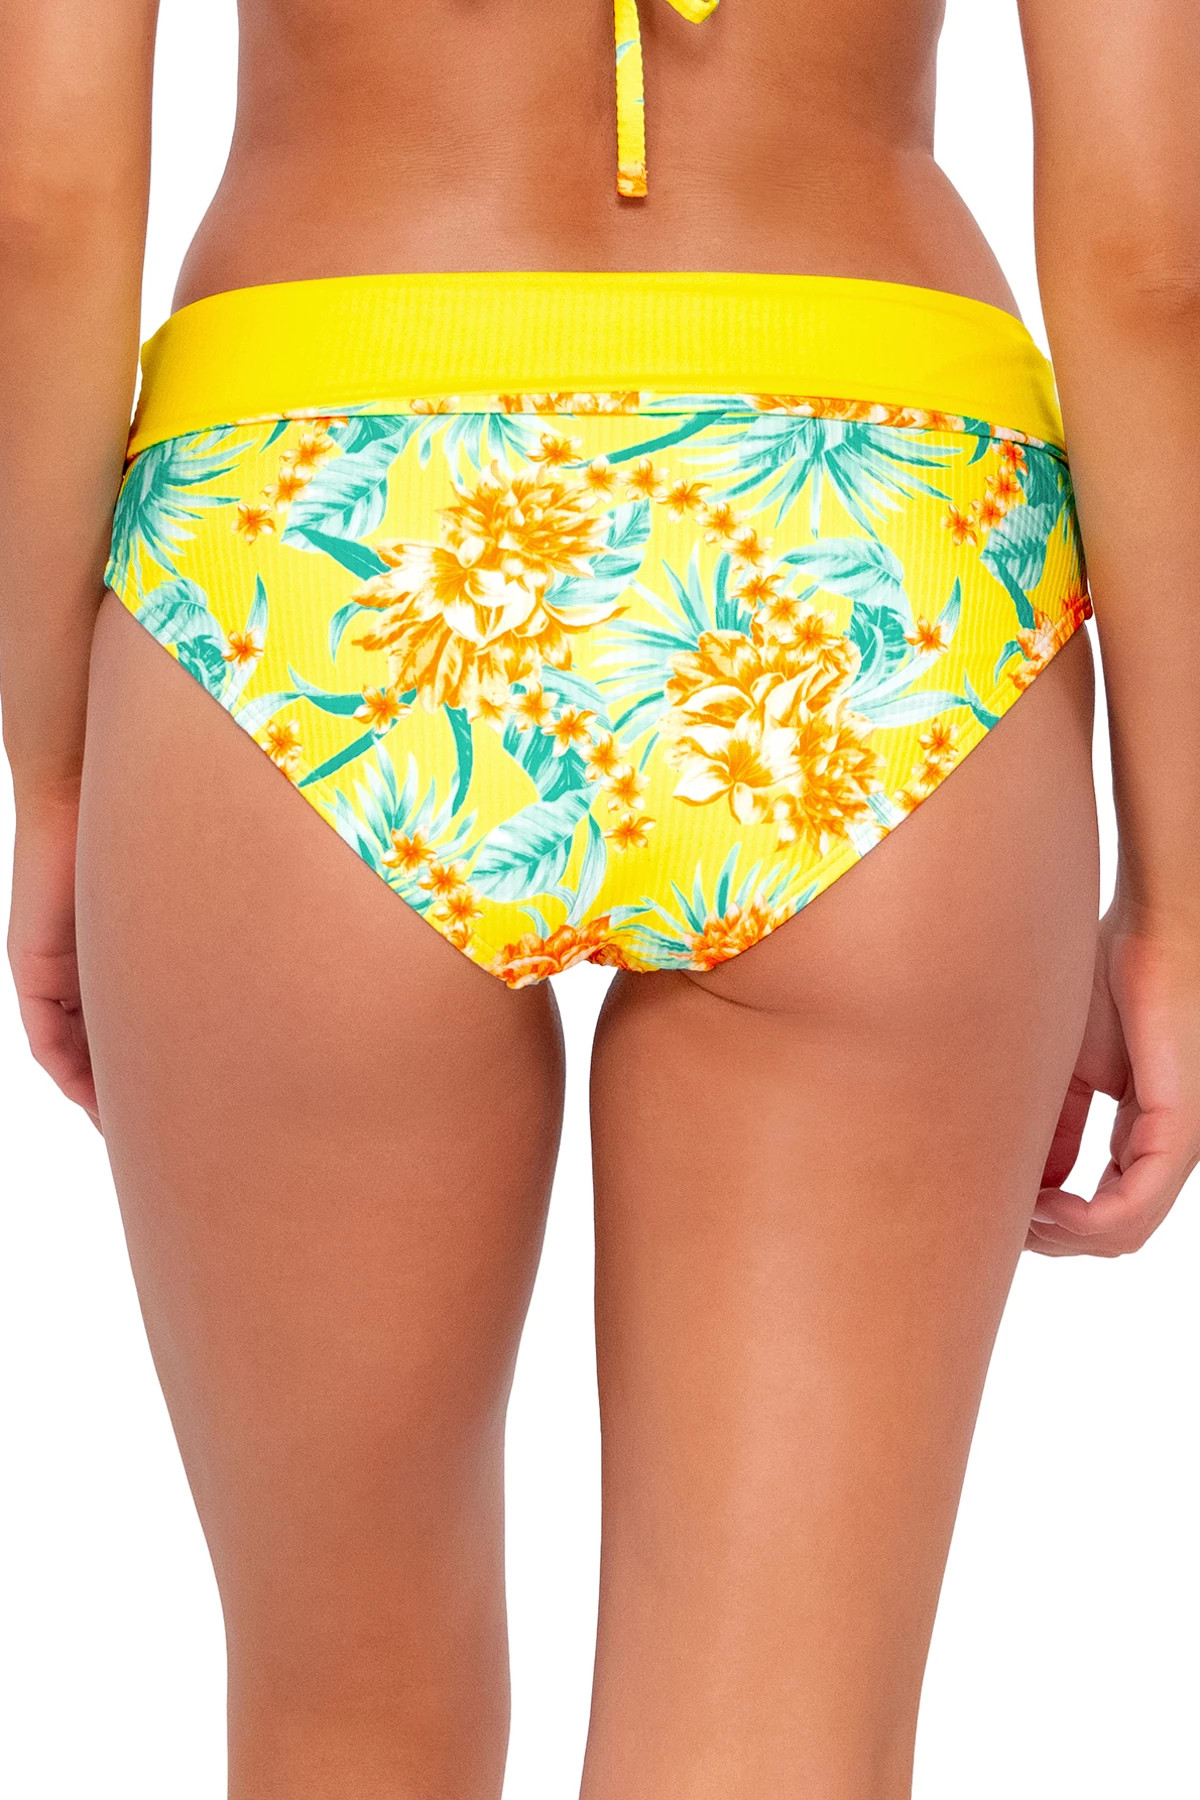 GOLDEN TROPICS SANDBAR RIB Capri High Waist Bikini Bottom image number 3